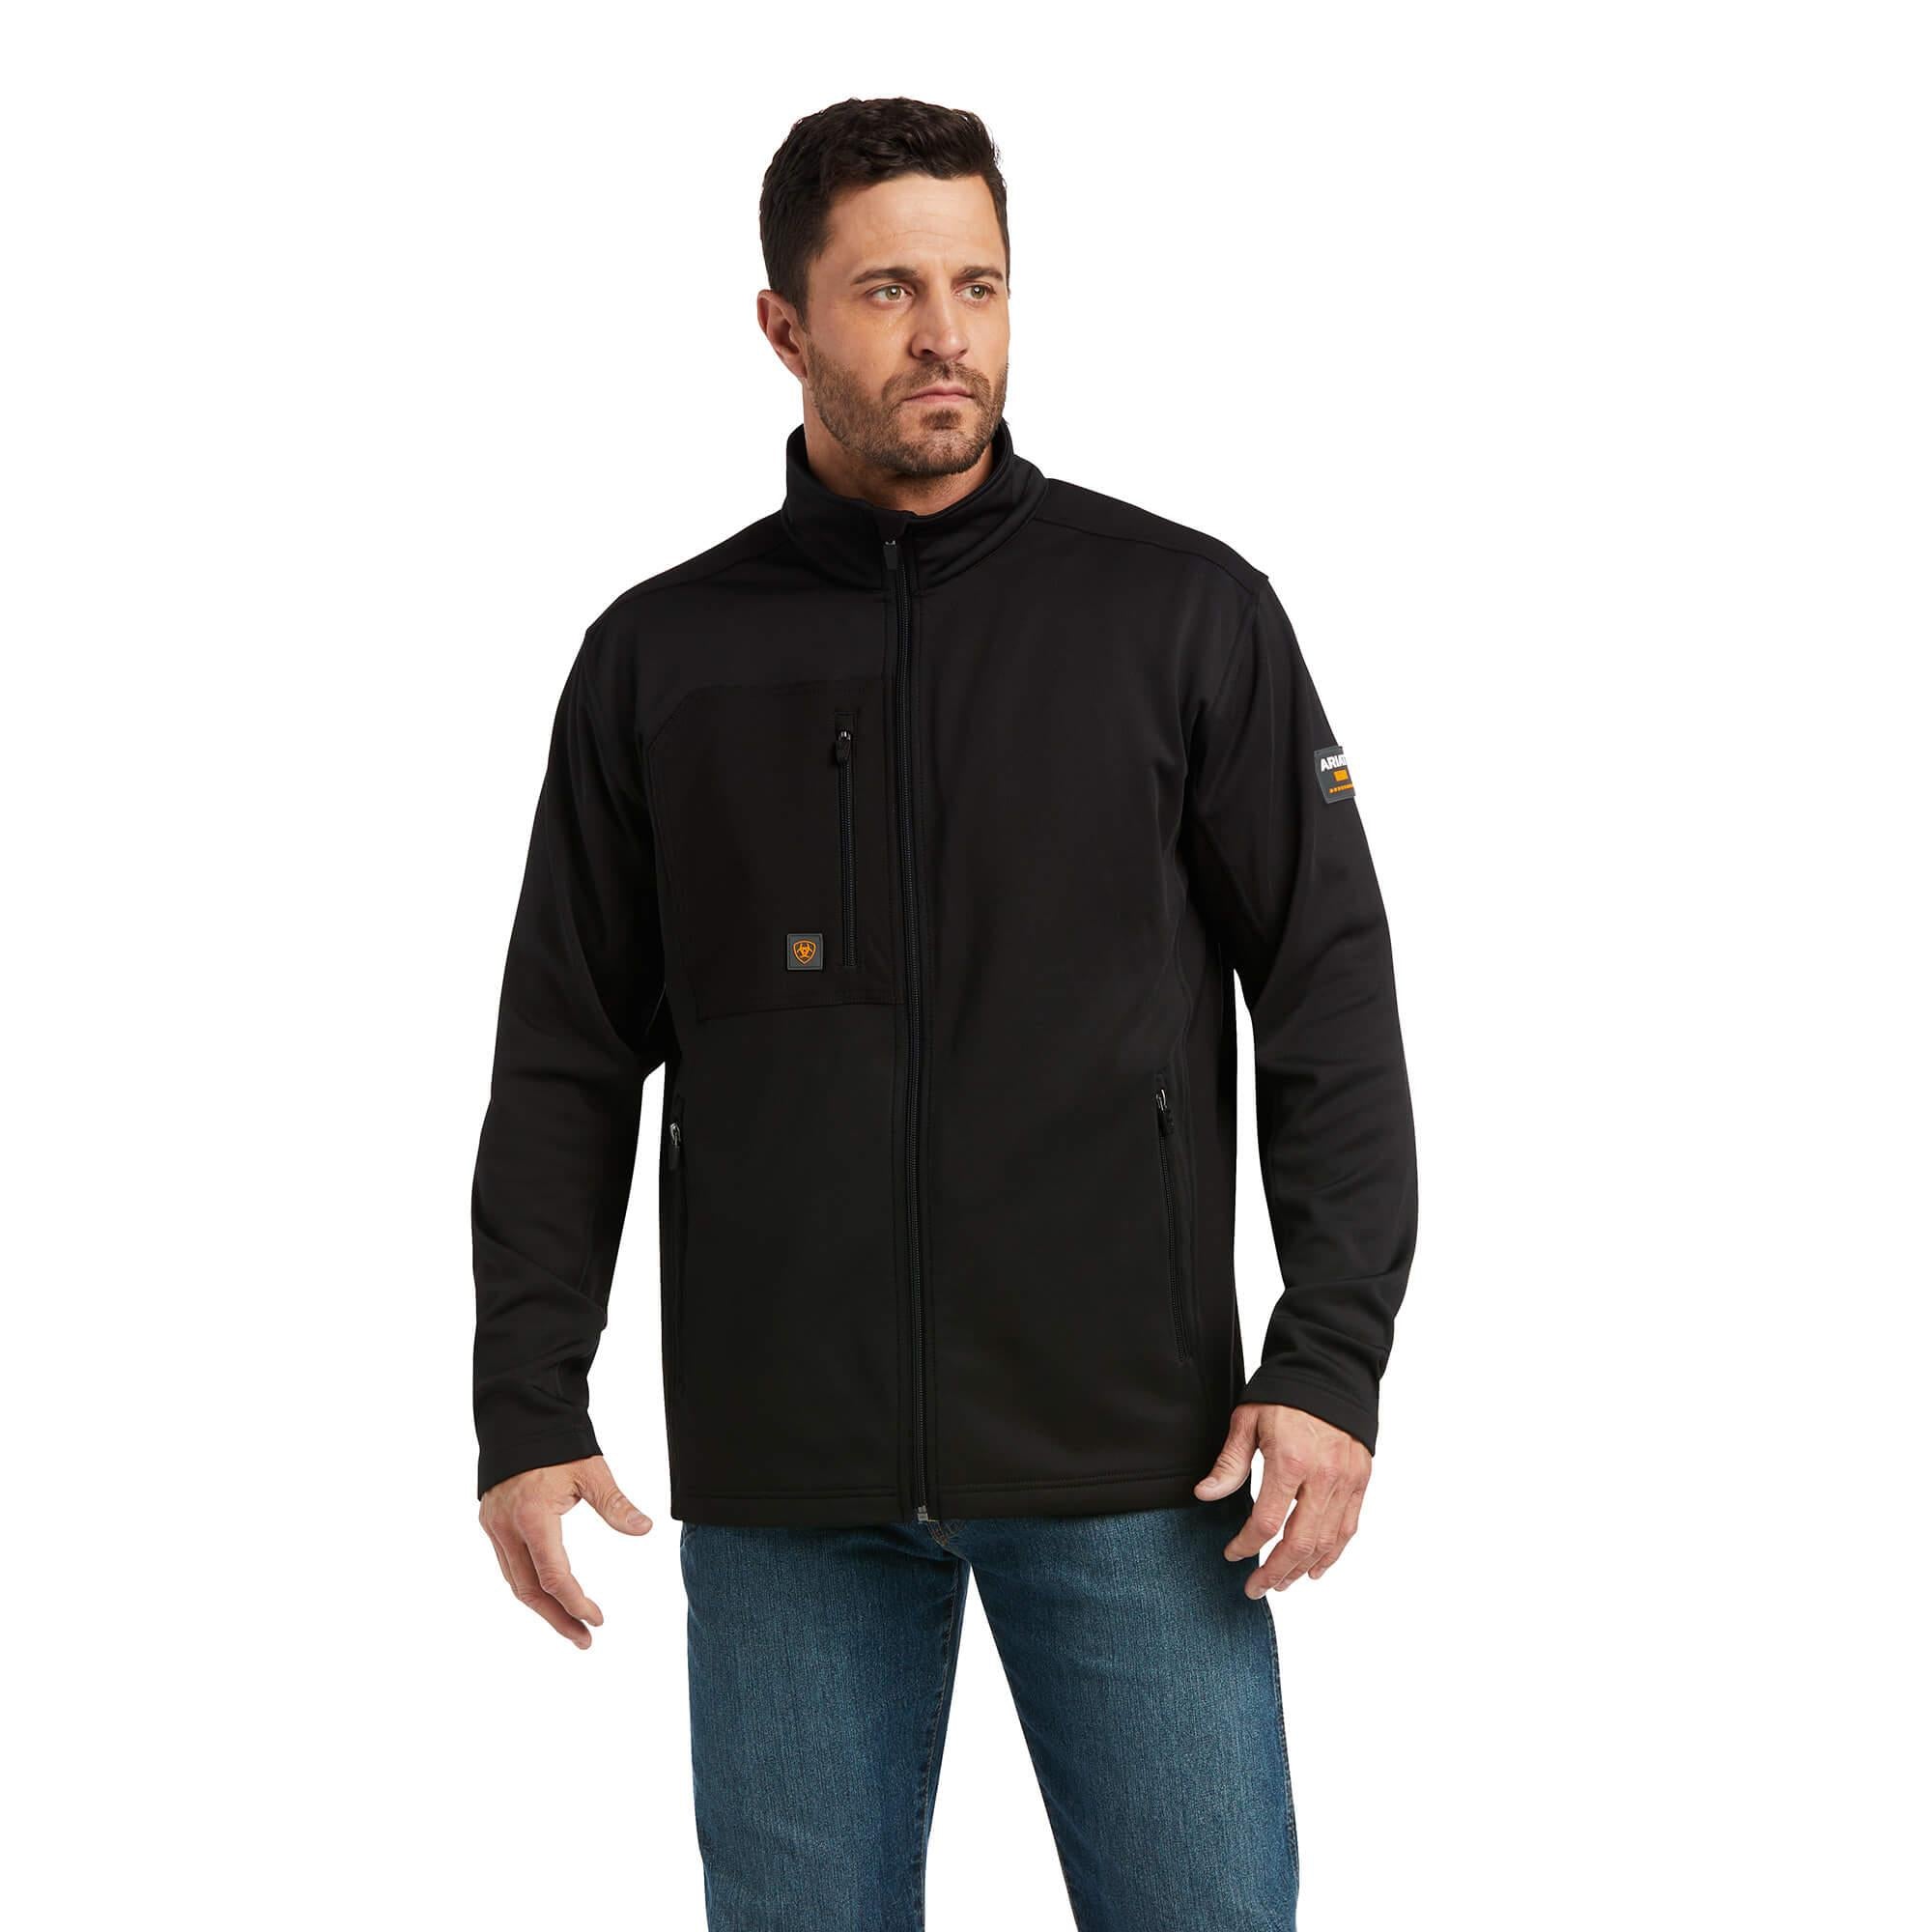 Men's Ariat Rebar Dri-Tech DuraStretch Fleece Hybrid Jacket